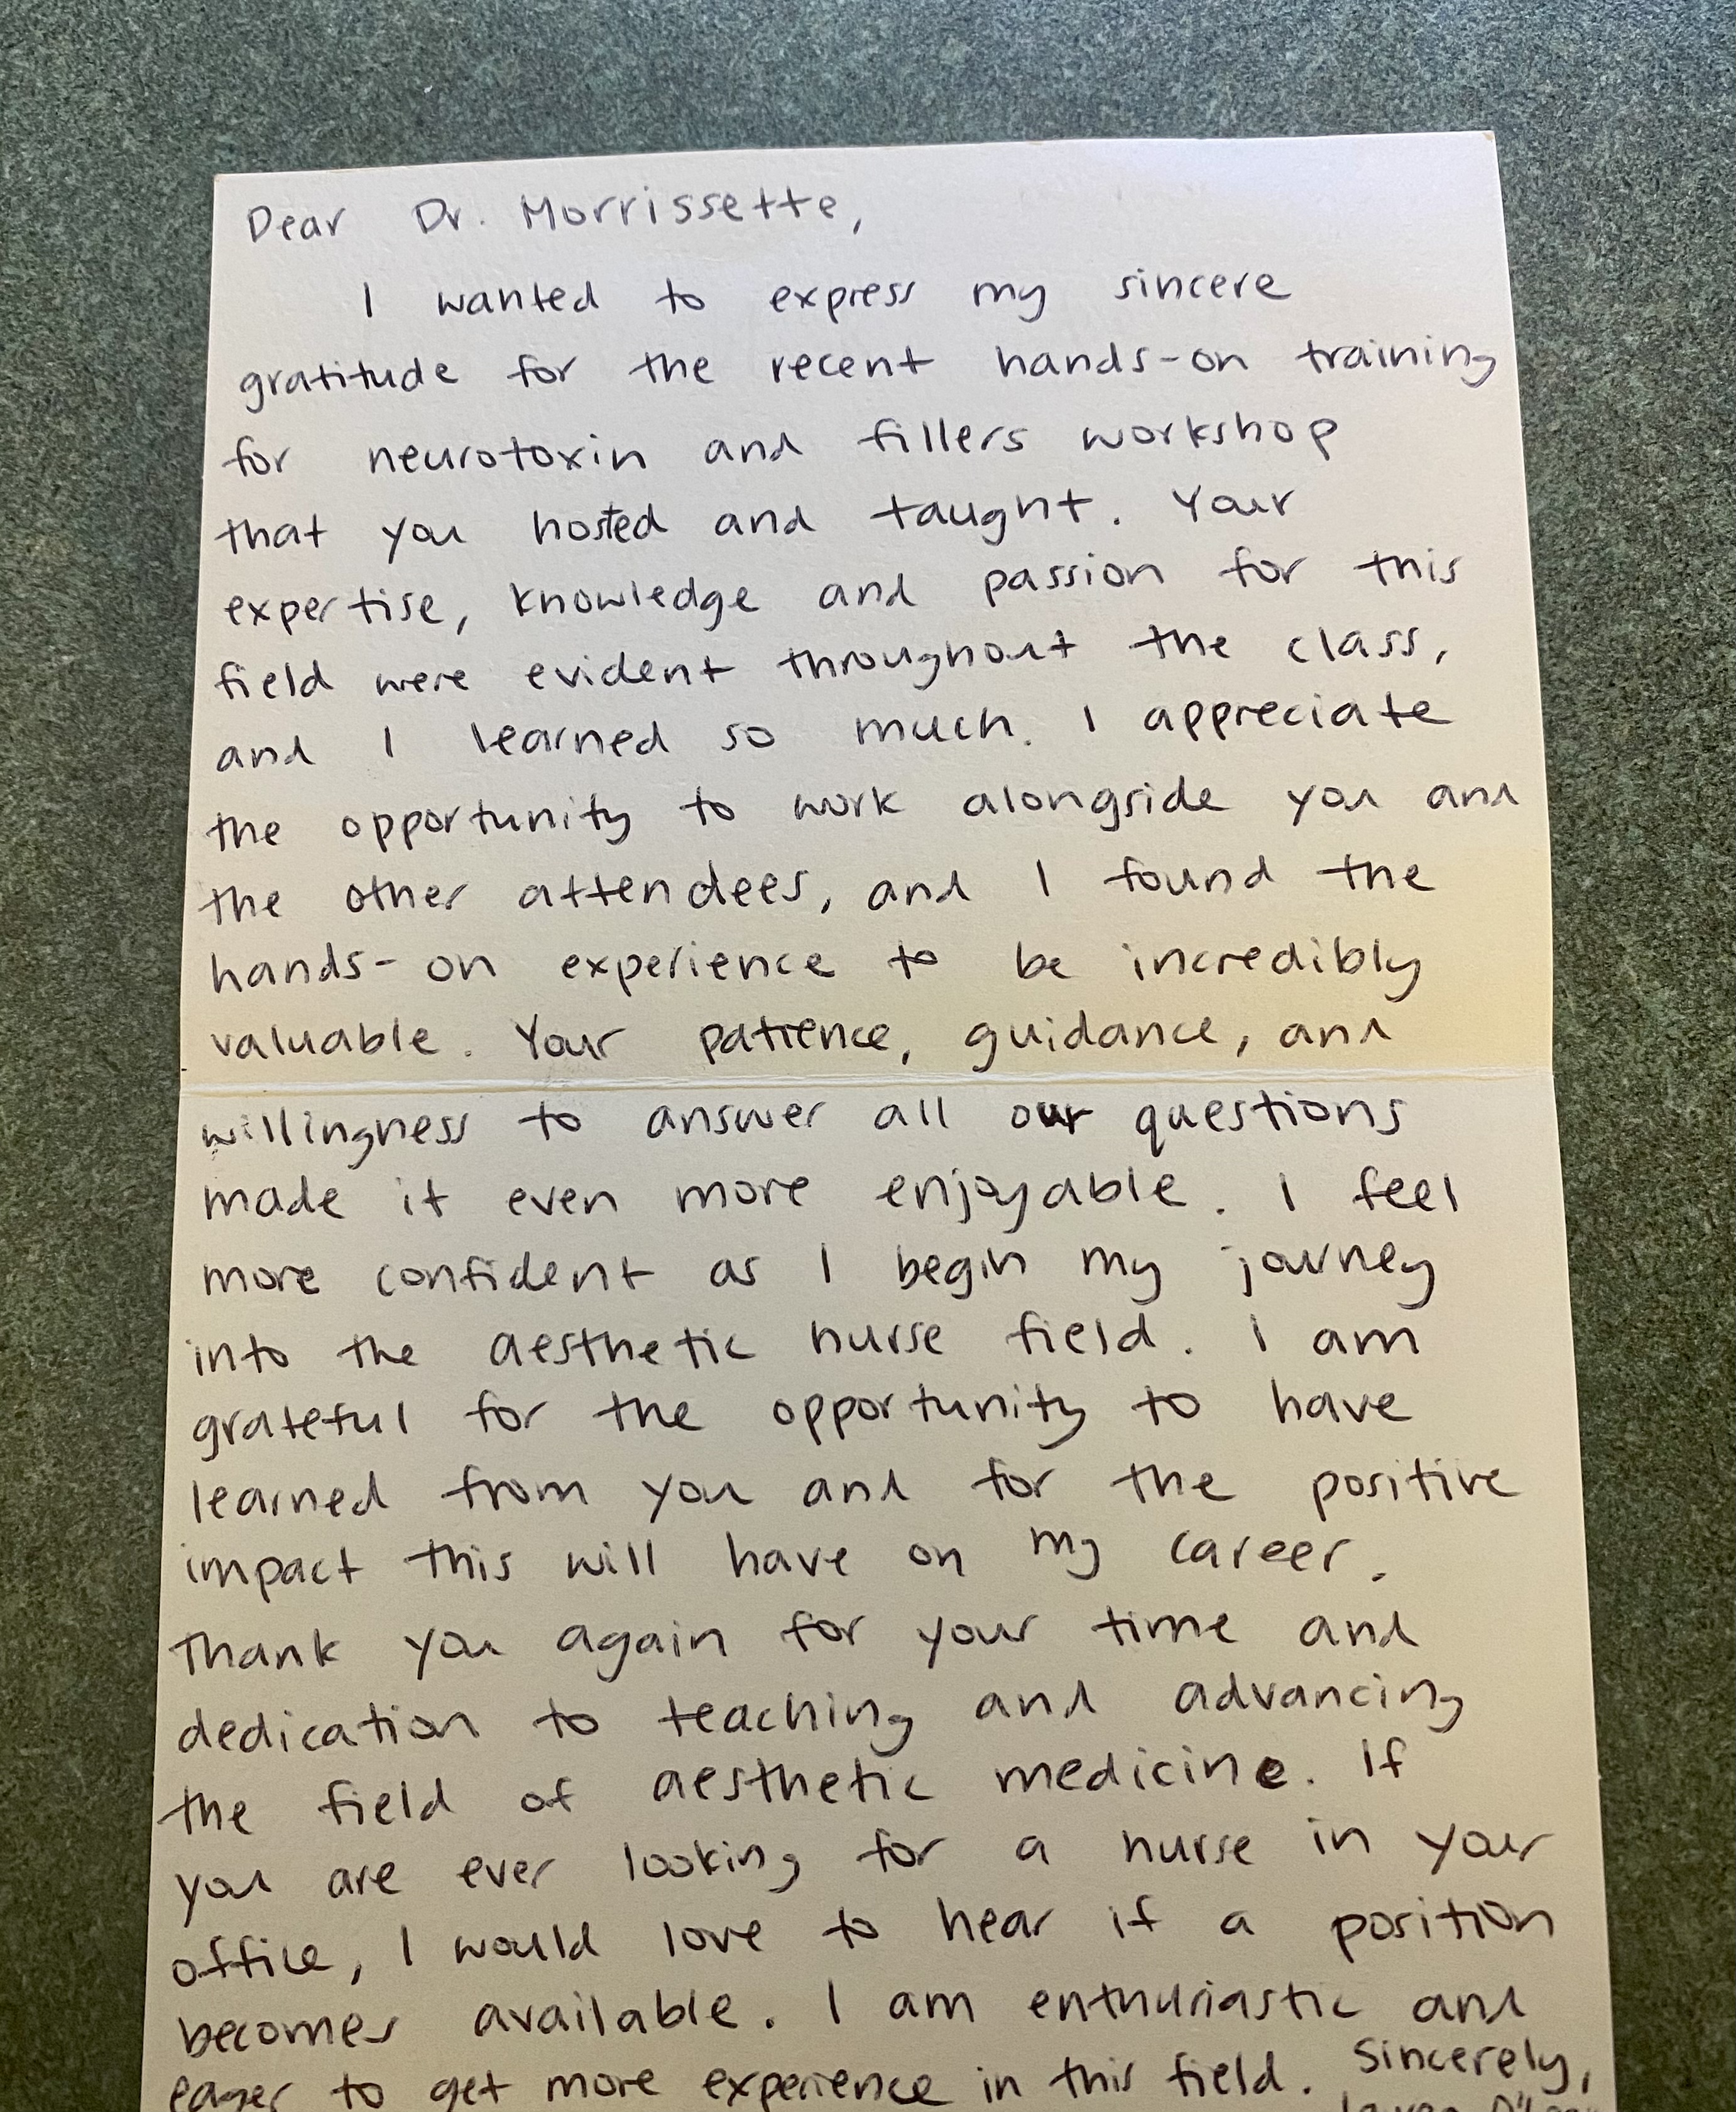 letter to Dr. Morrissette thanking him